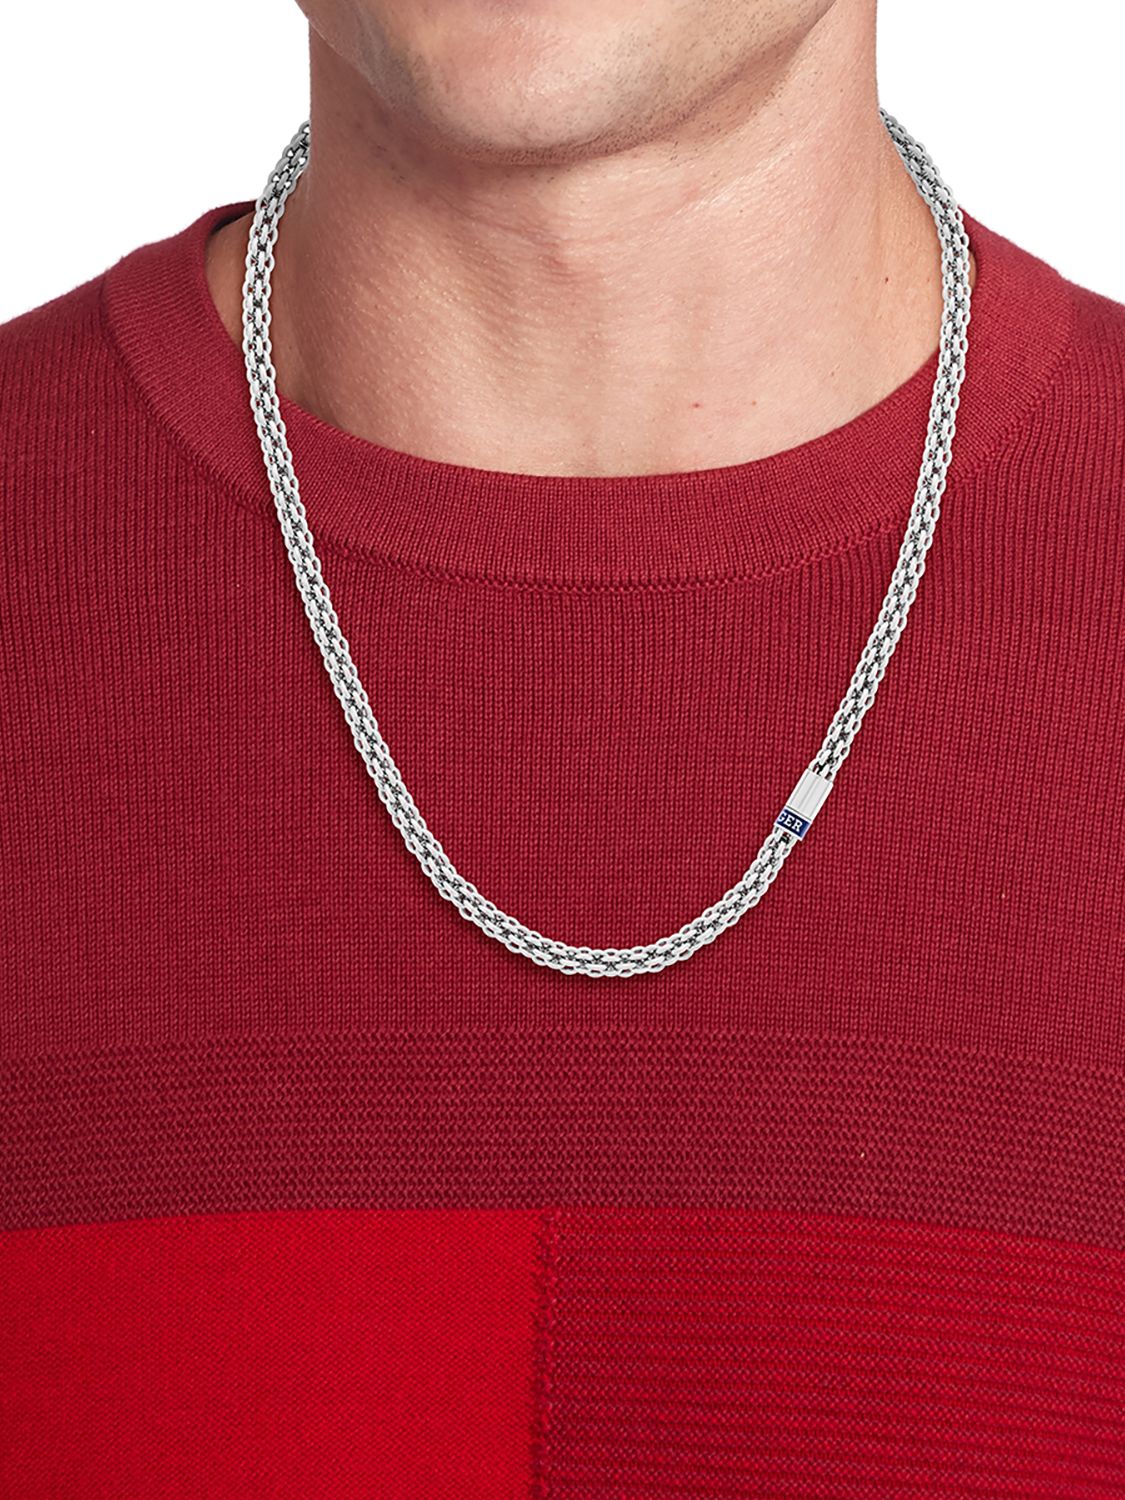 Tommy Hilfiger Men's Interlinked Chain Necklace, Silver